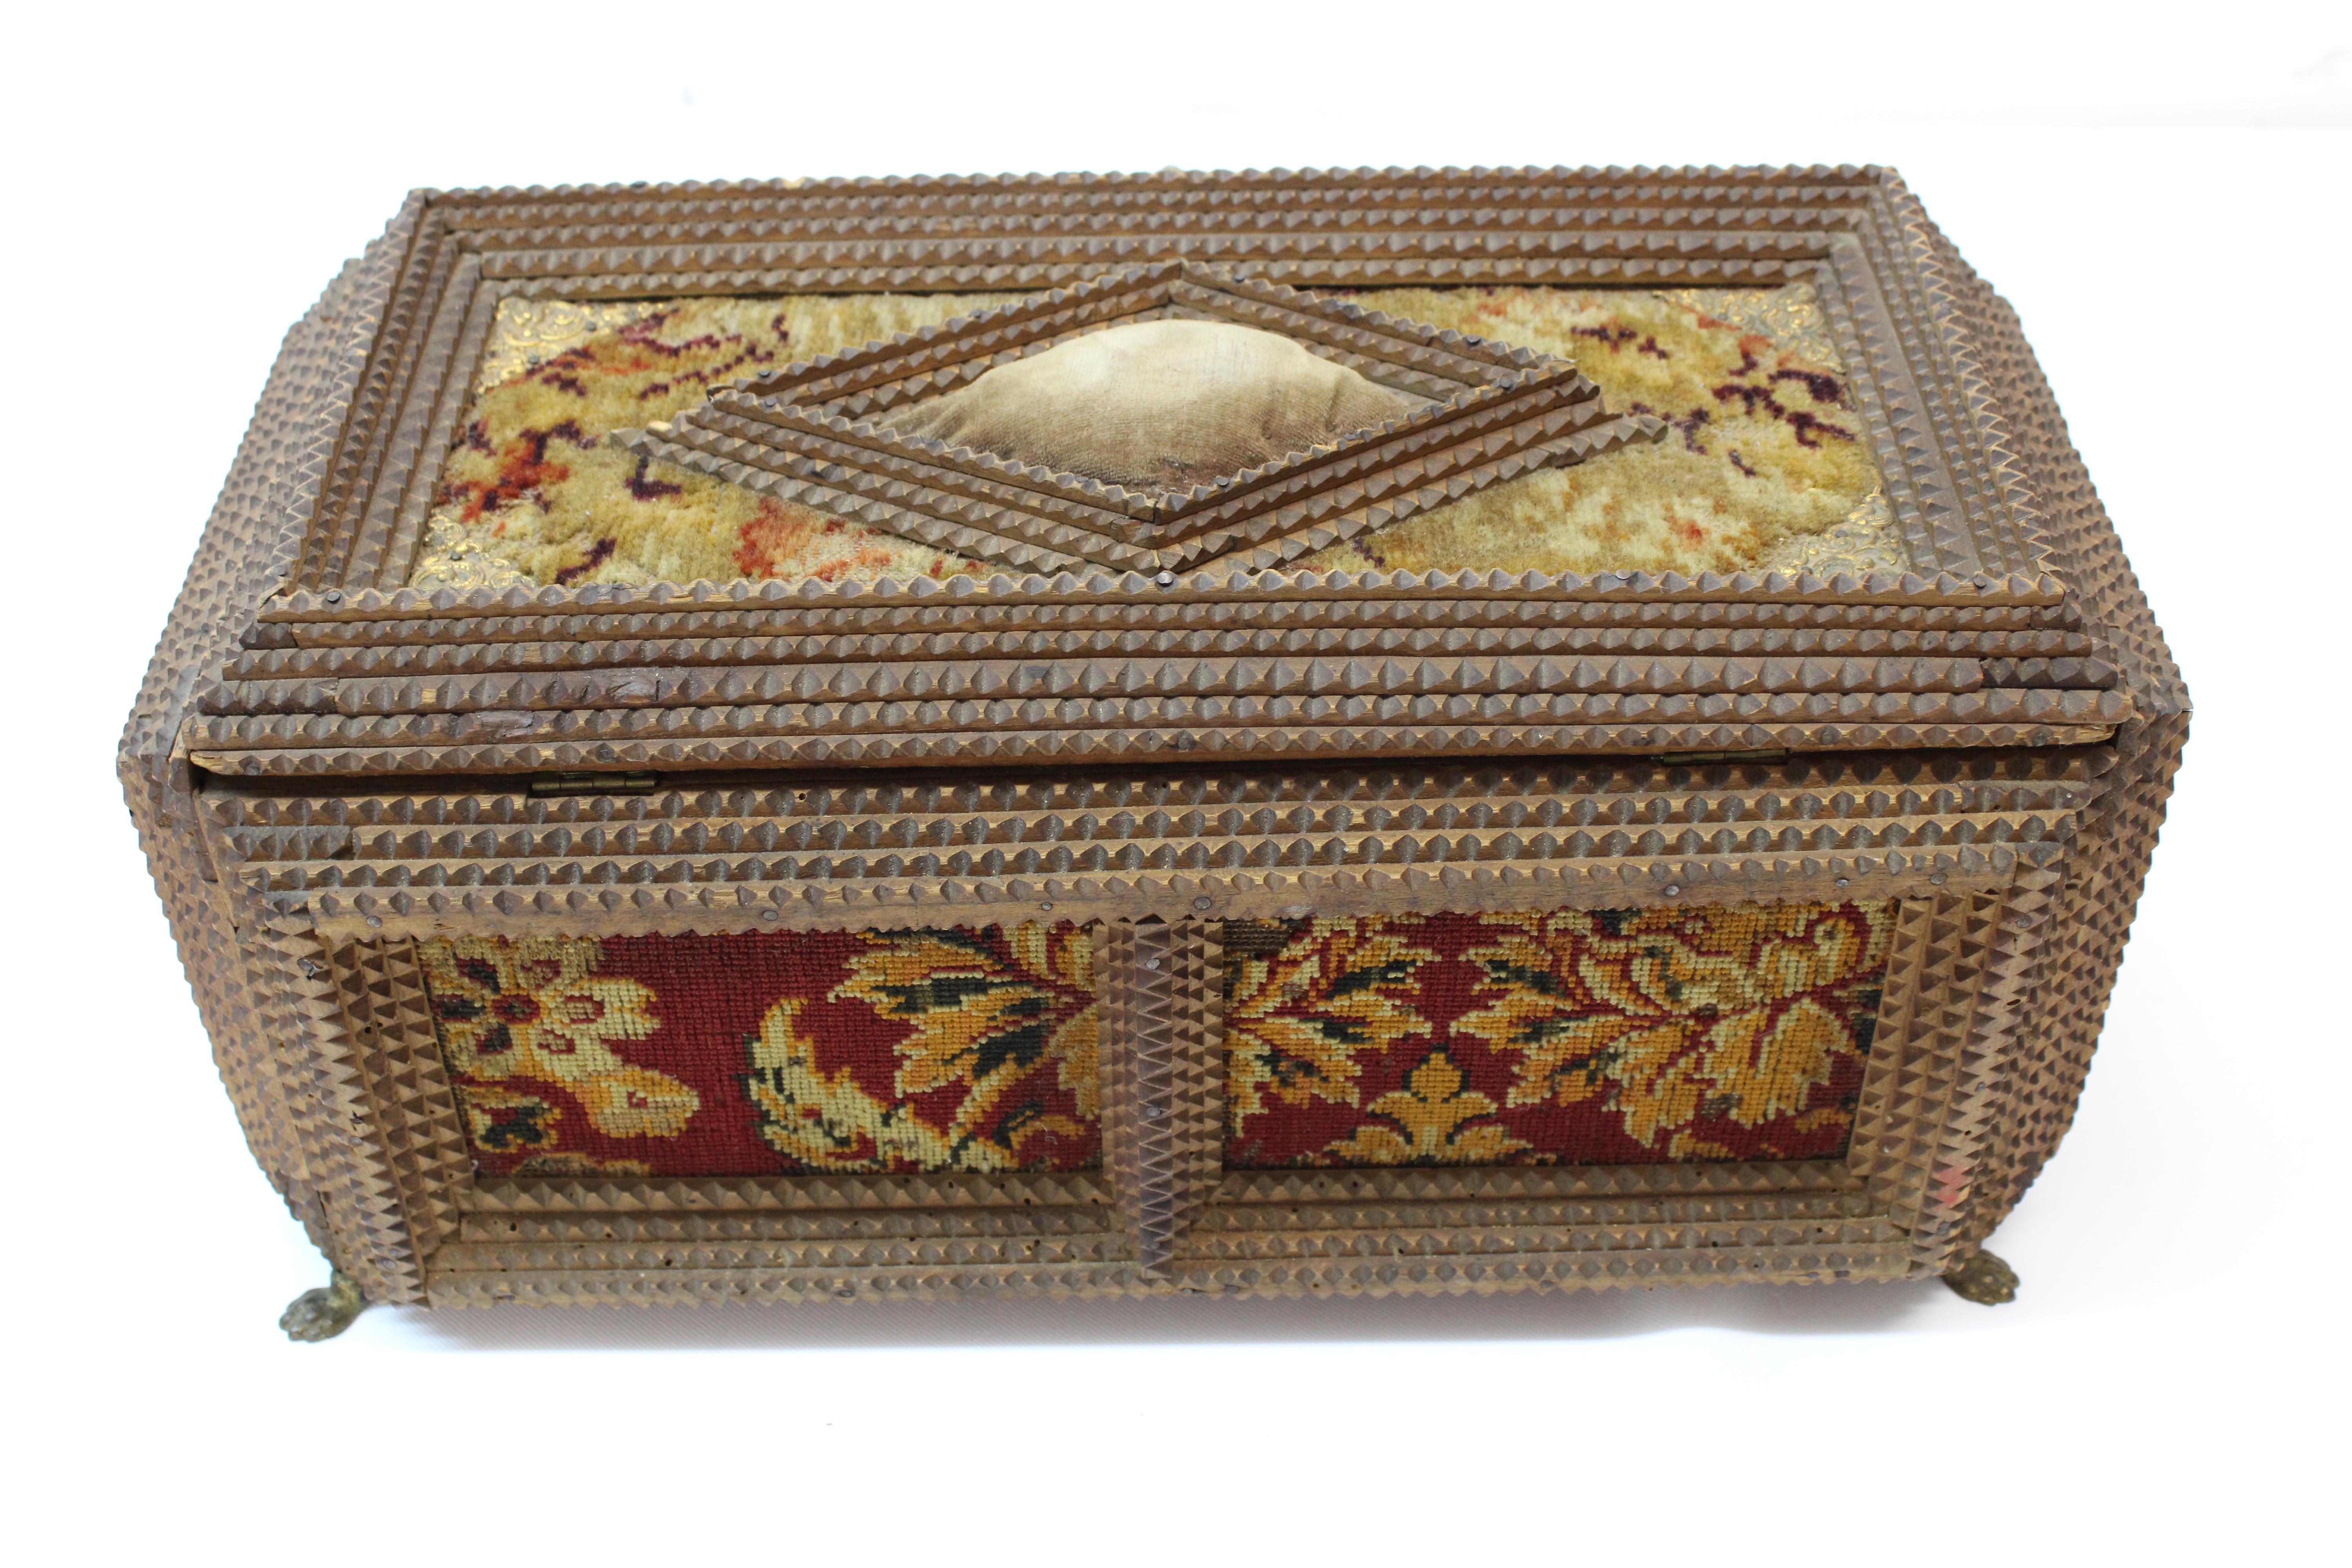 20th Century Tramp Art Sewing Box